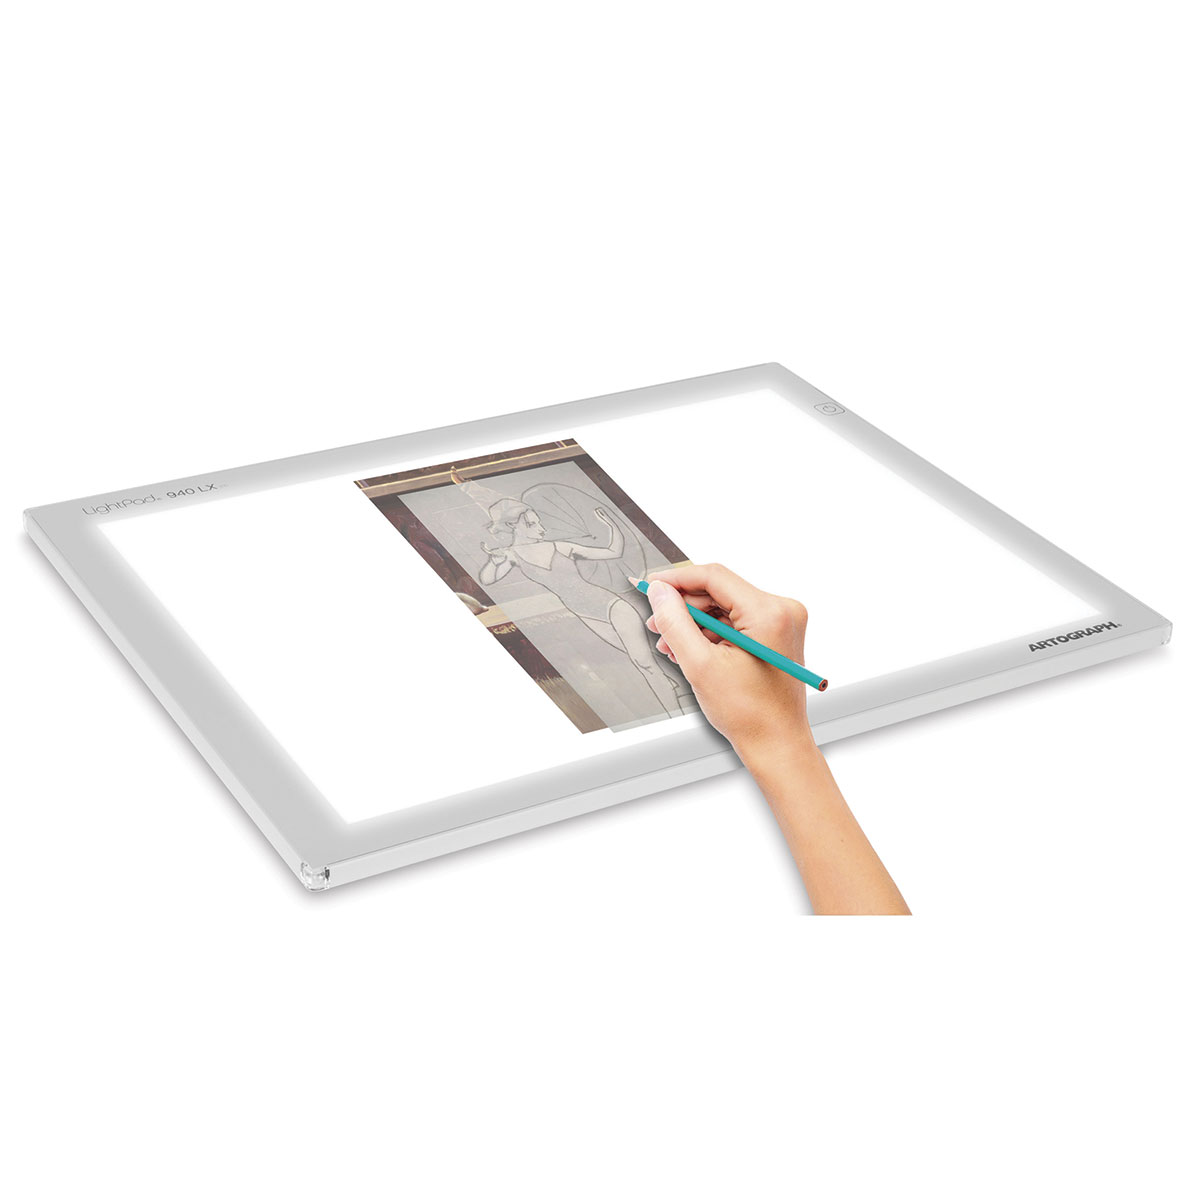 Artograph LightPad LX LED Light Box